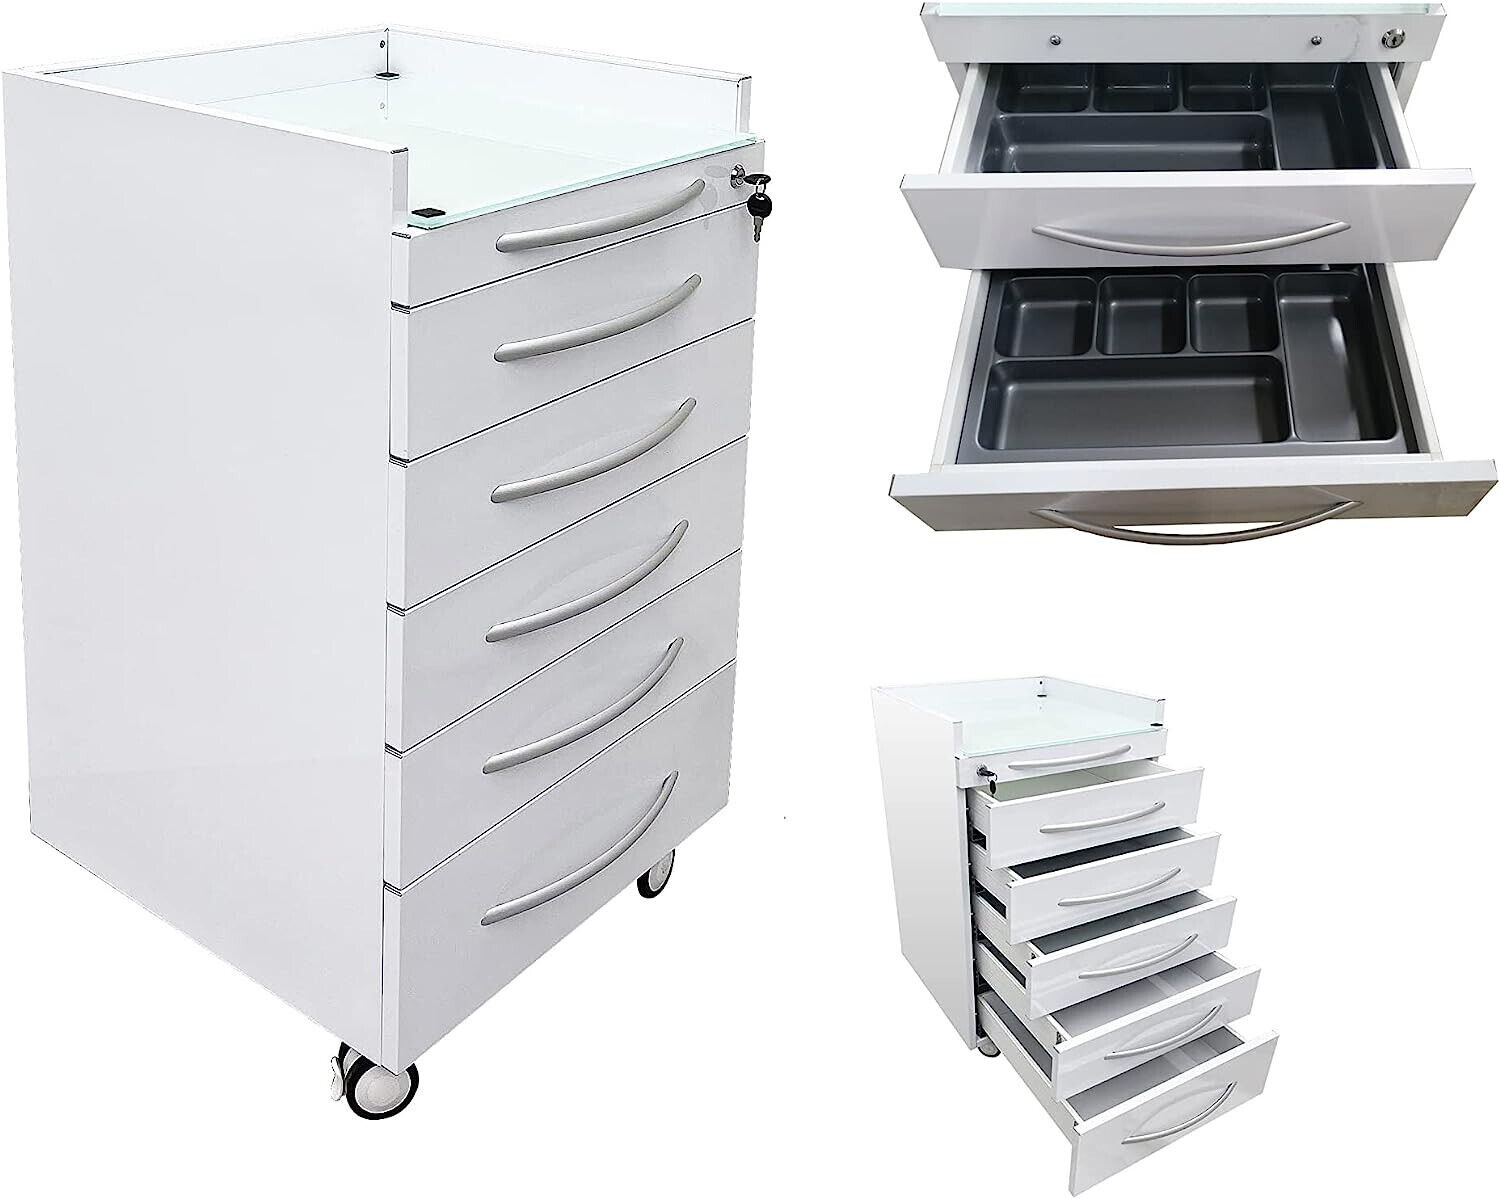 Dental Storage Cabinet 5 Drawers Mobile Utility Cart Medical Cabinet Office Stor